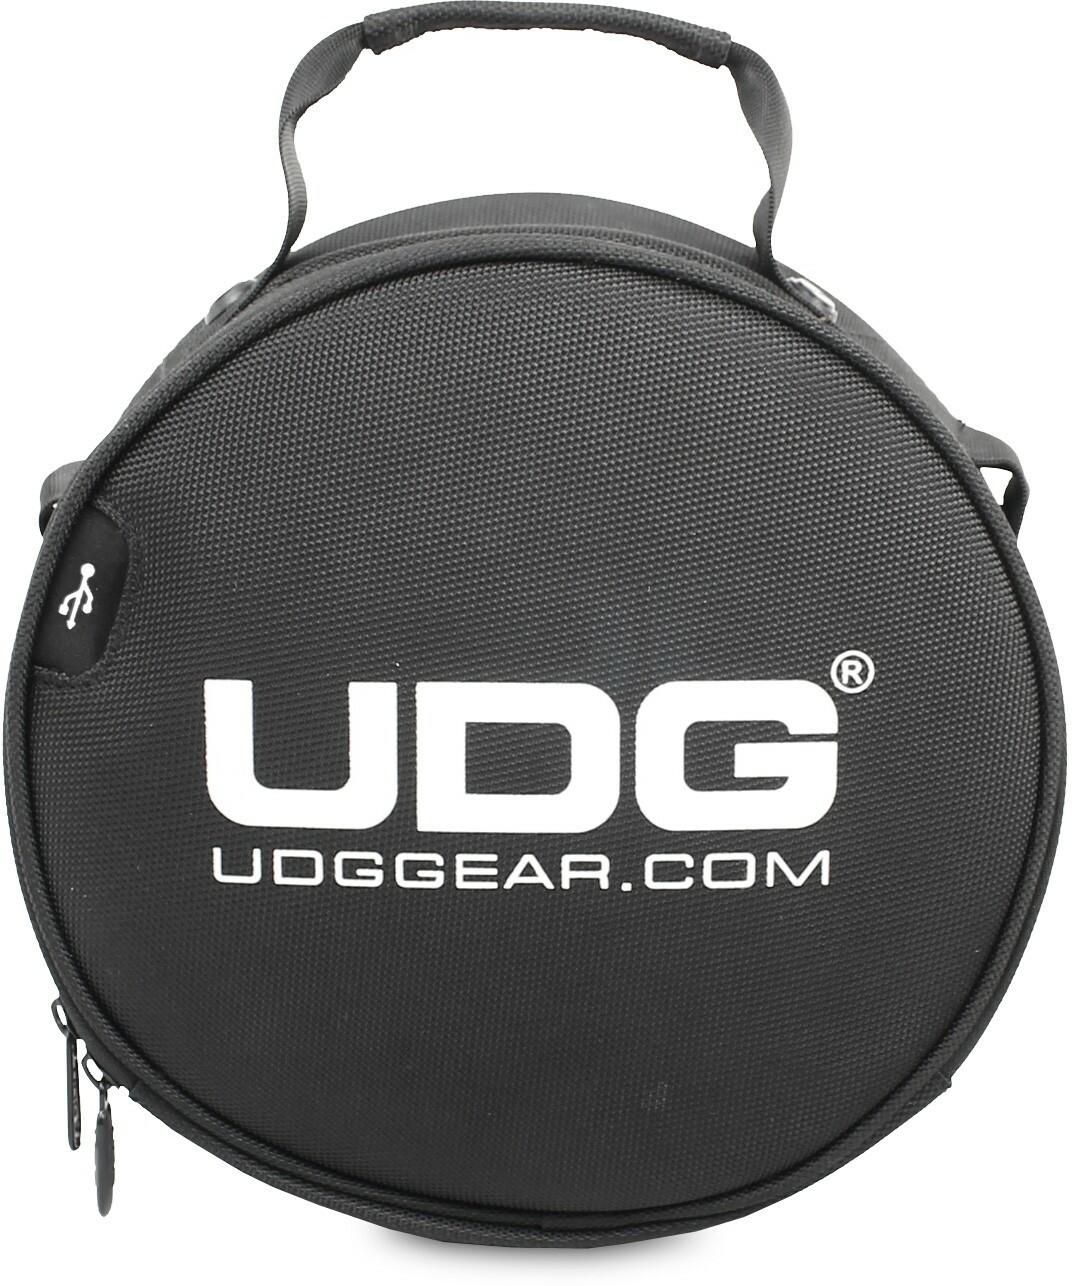 Udg Ultimate Digi Headphone Bag Black - Trolley DJ - Main picture